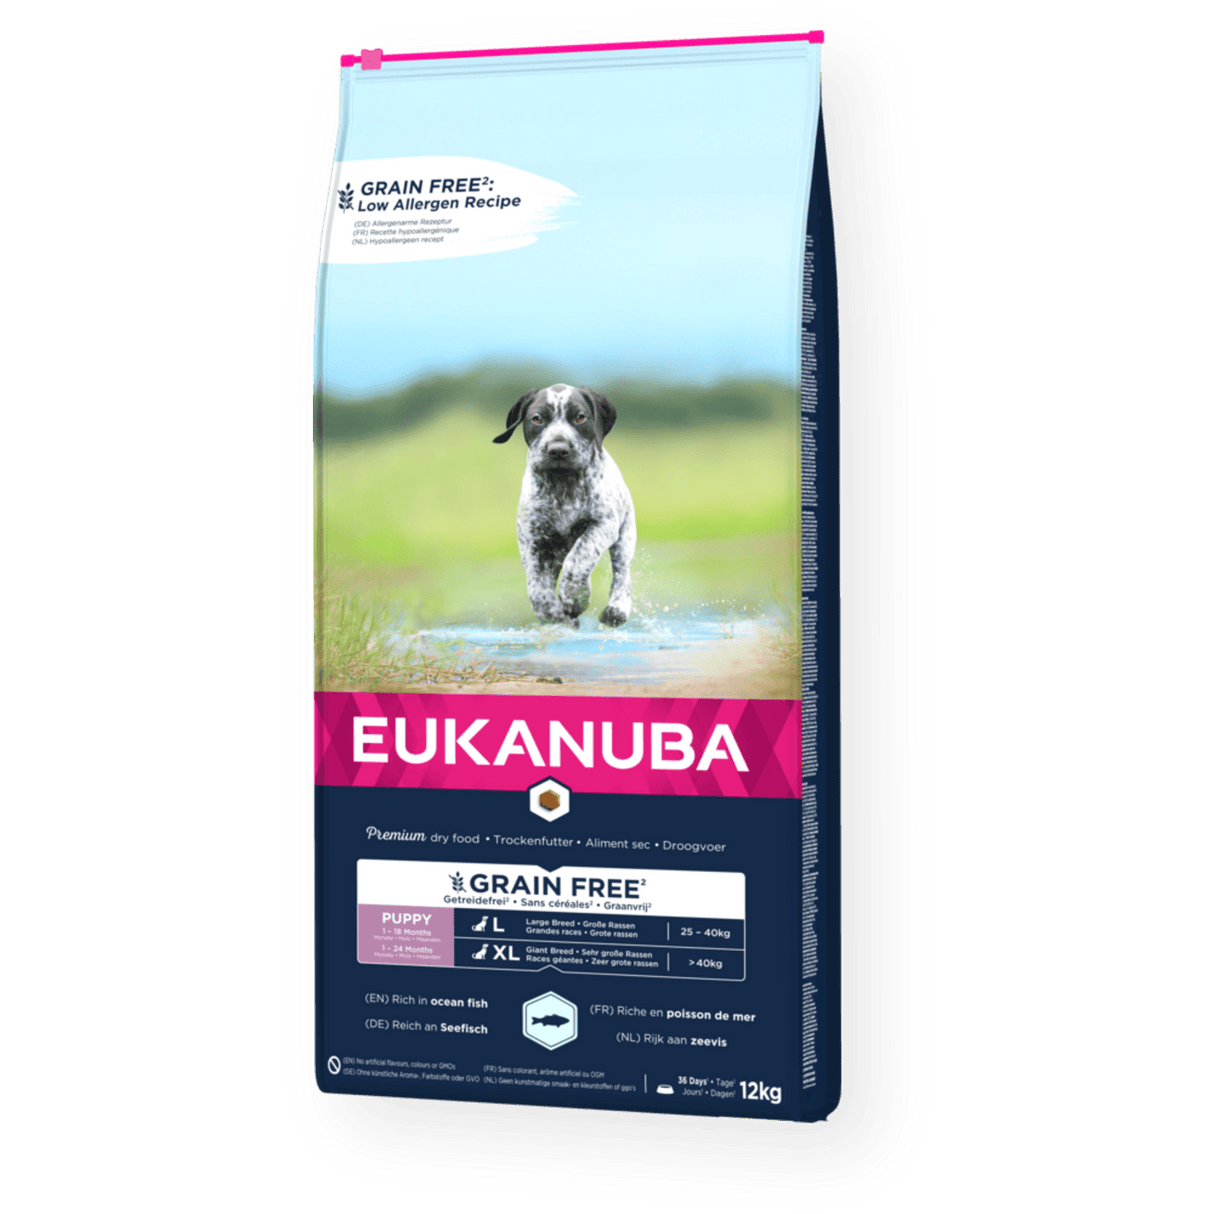 Eukanuba Grain Free Puppy Large Breed Ocean Fish Dry Dog Food, Eukanuba, 12 kg